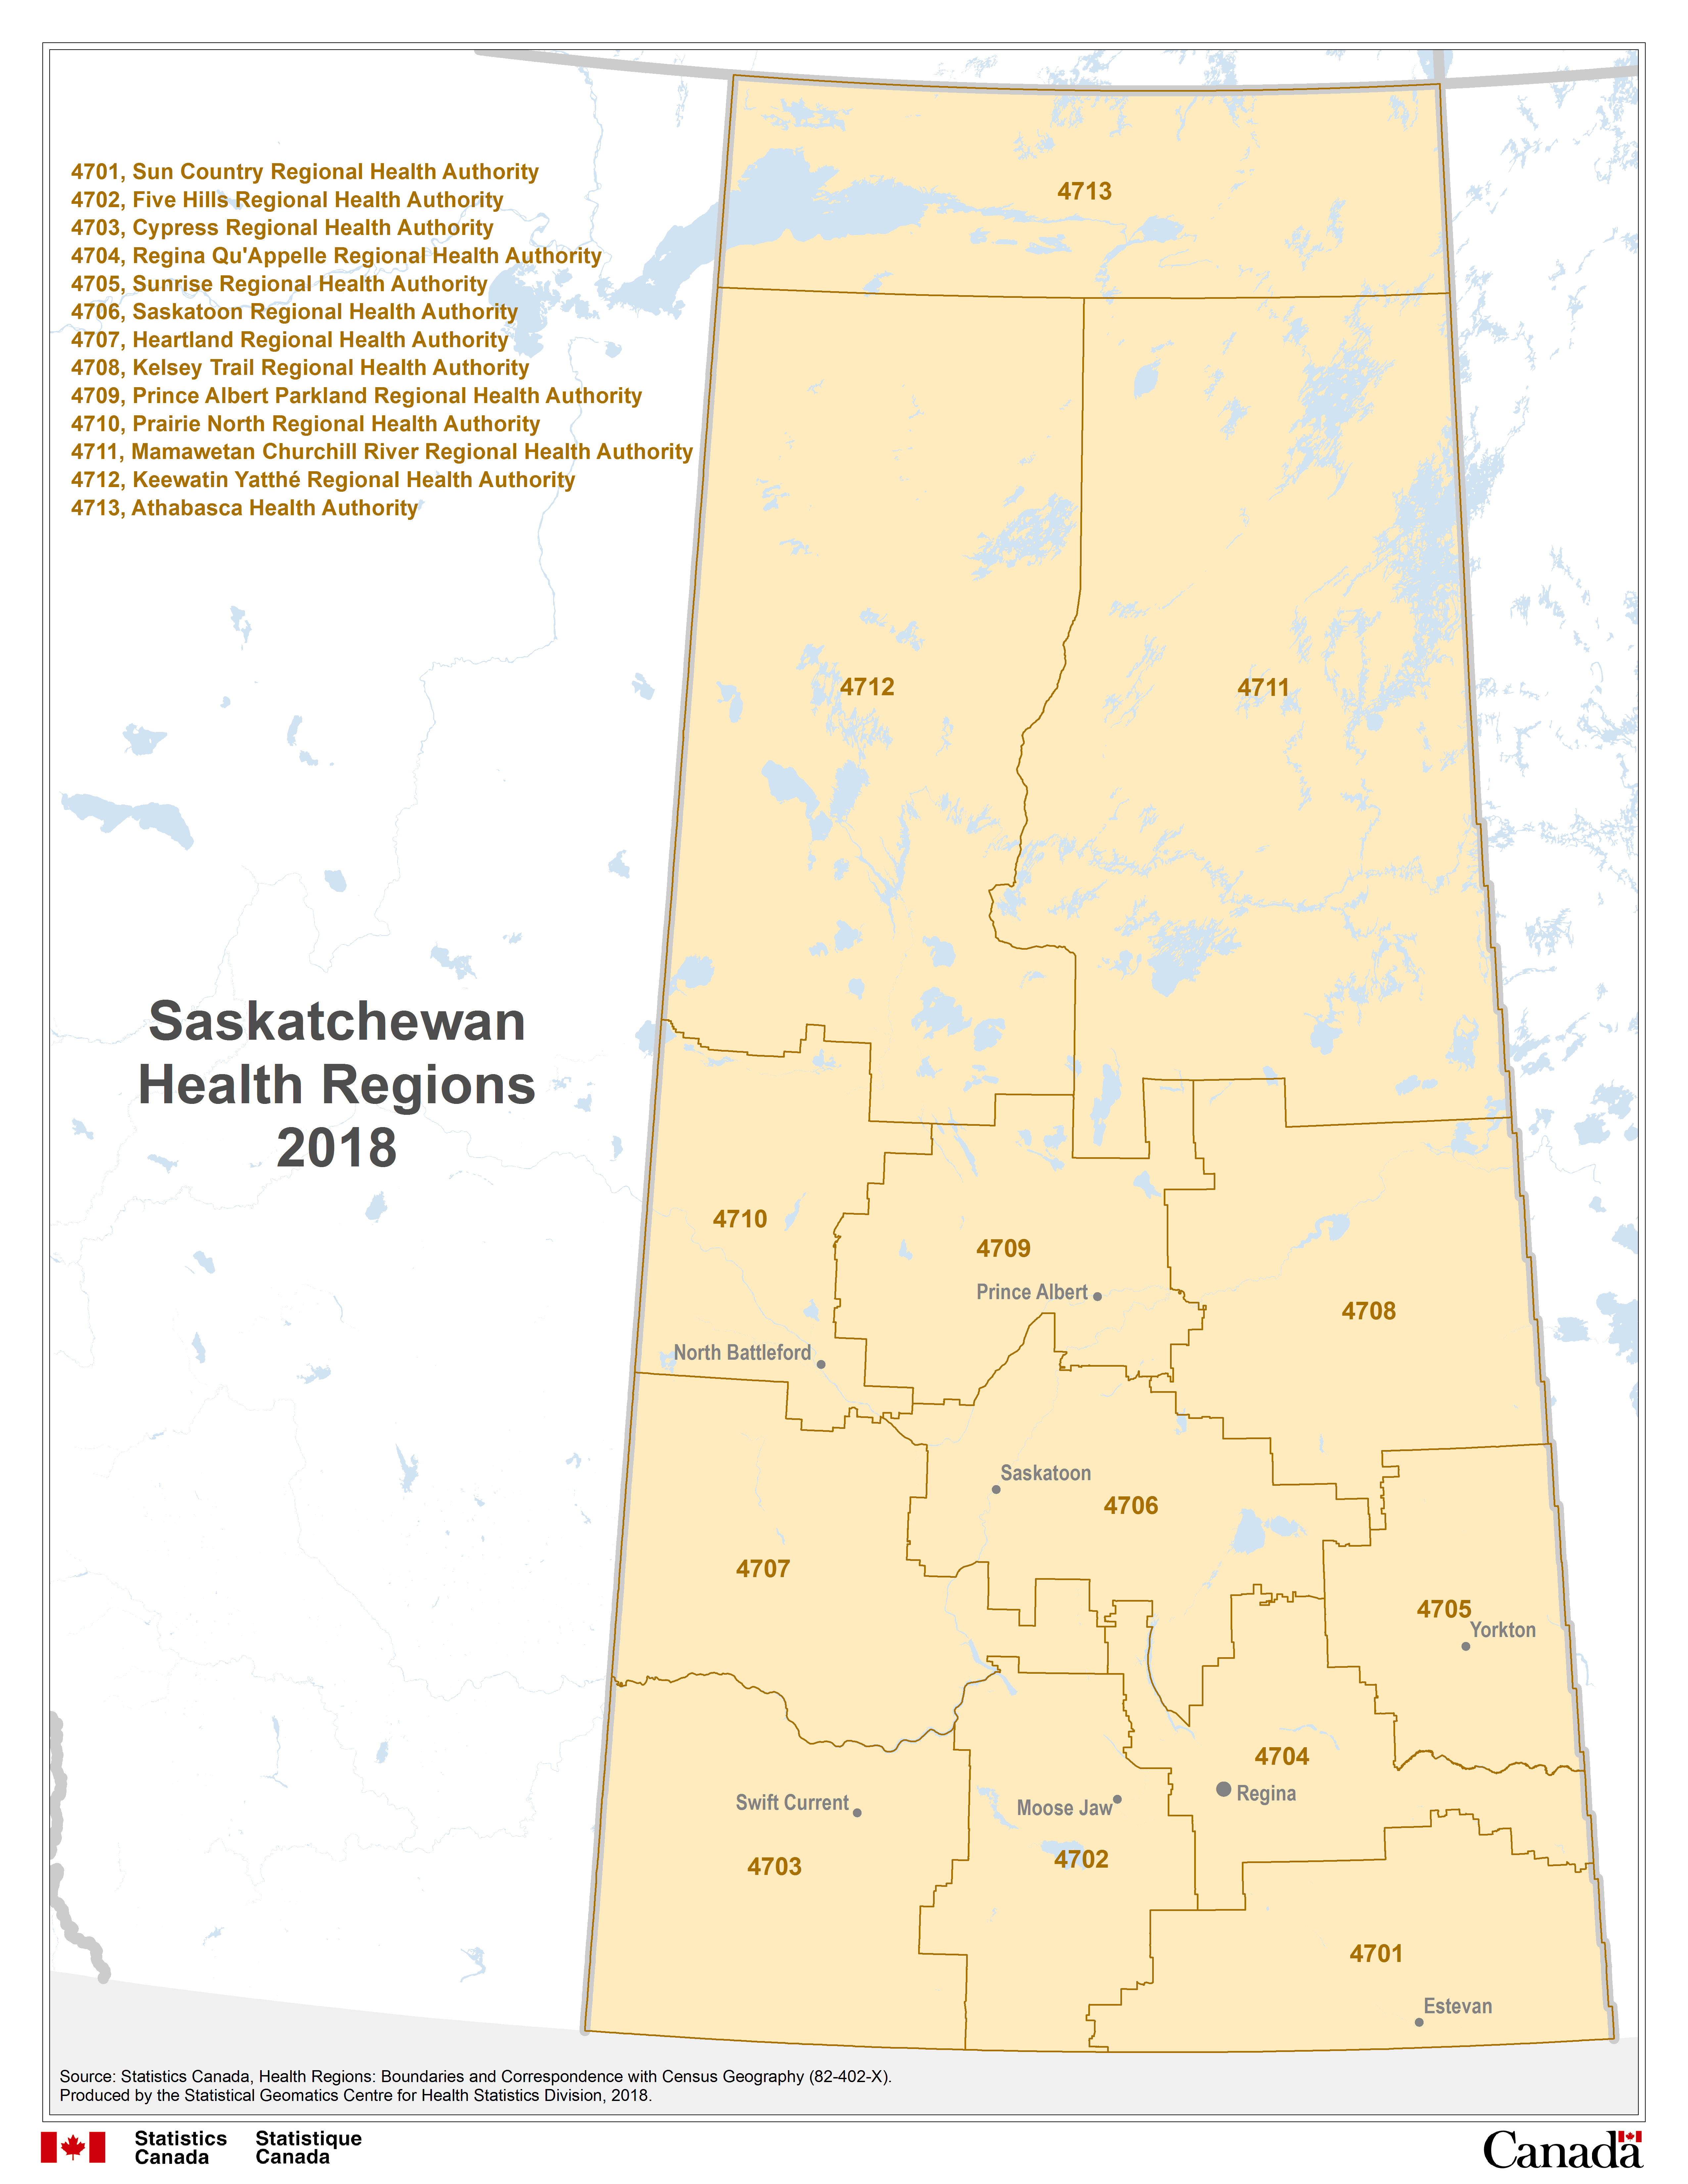 Map 10 Saskatchewan Health Regions, 2018